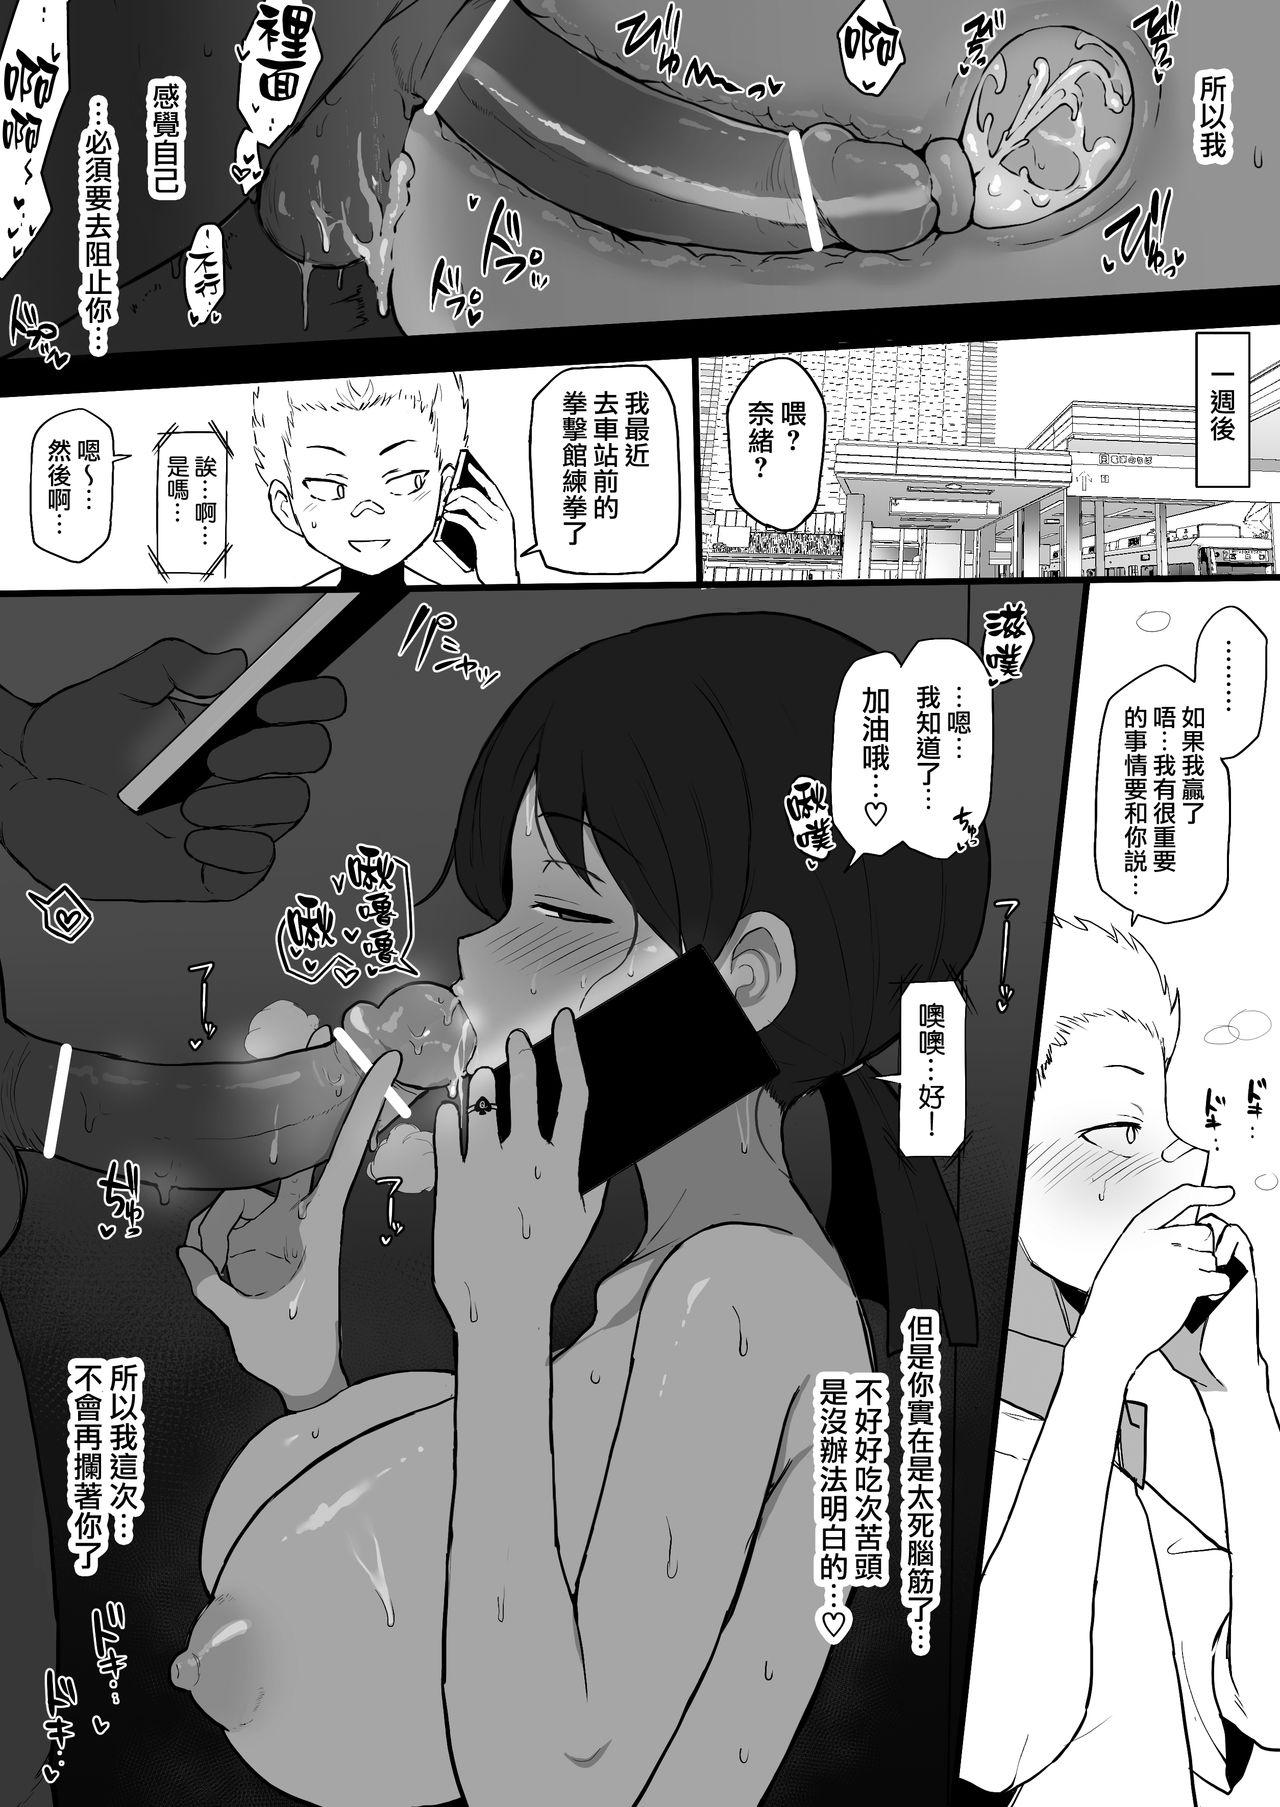 Collar Kokujin no Tenkousei NTR ru Chapters 1-6 part 1 Plus Bonus chapter: Stolen Mother’s Breasts - Original Analplay - Page 4